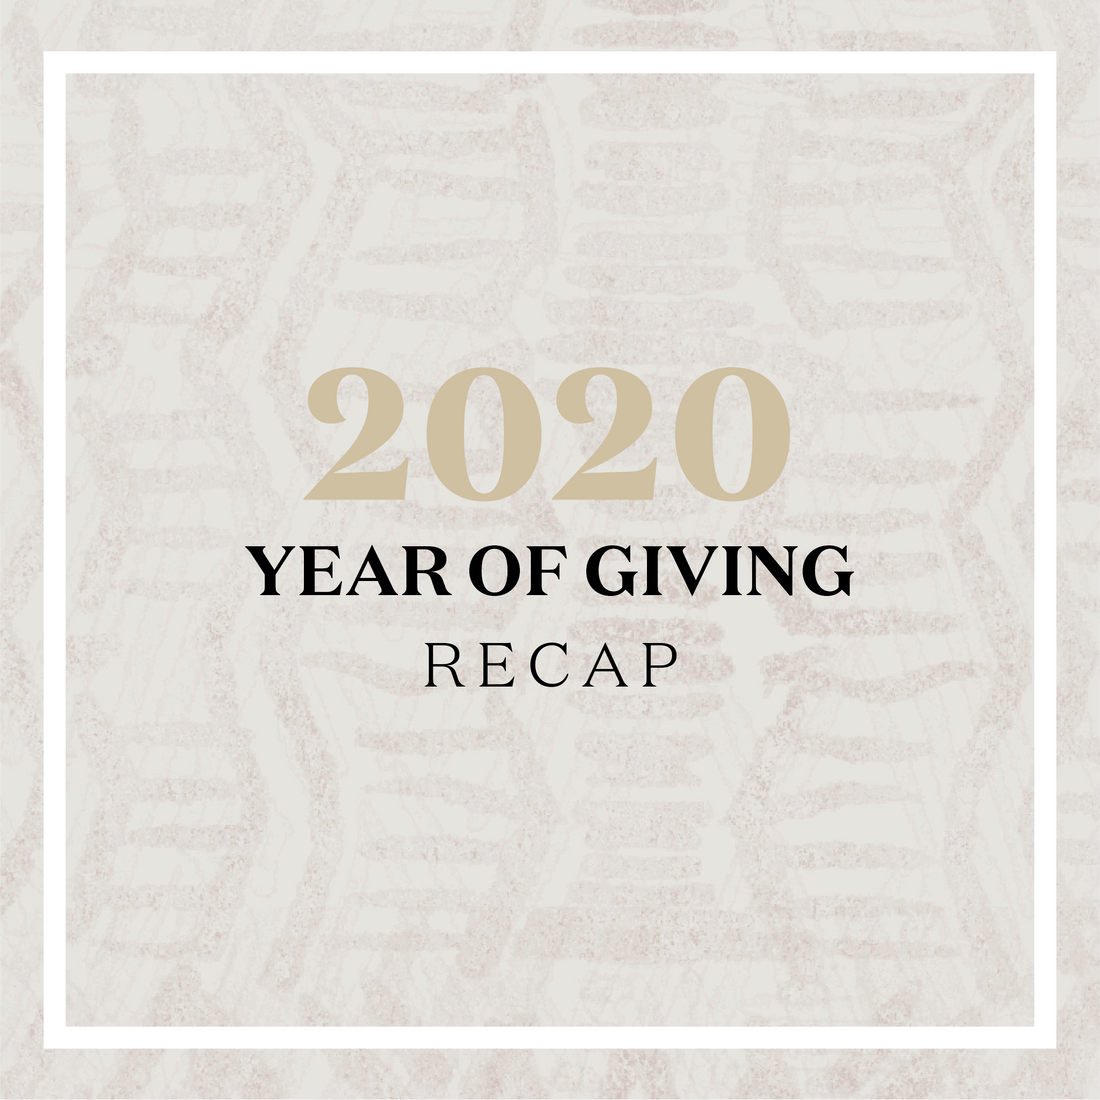 2020 Year of Giving Recap